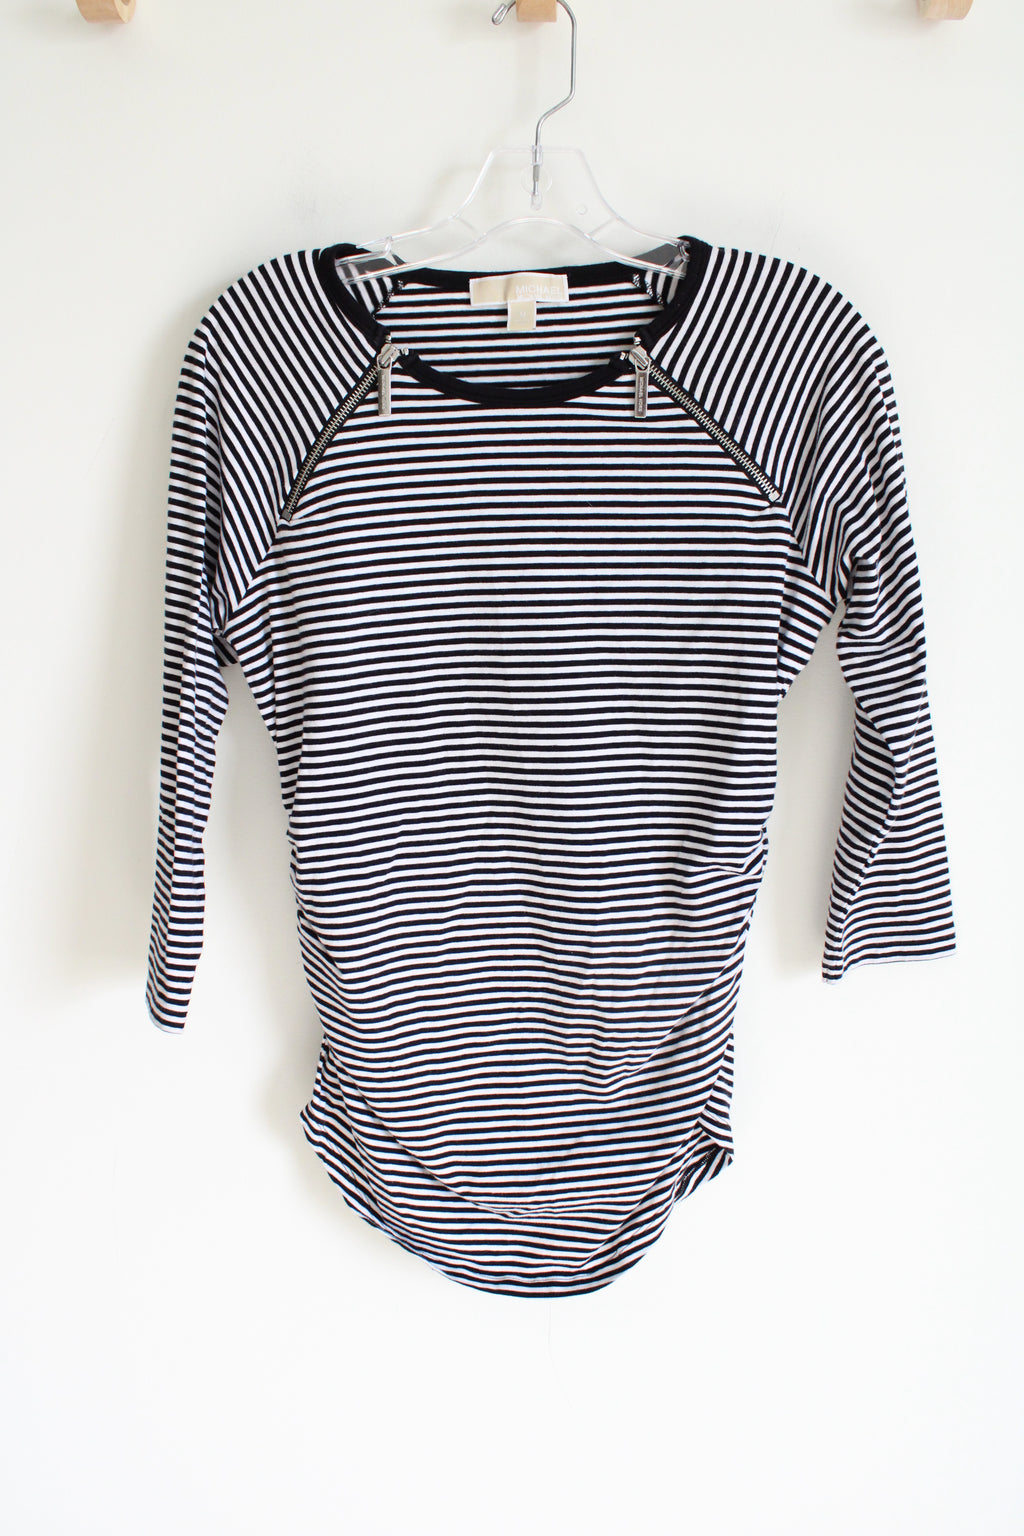 Michael Kors Black Striped Long Sleeved Shirt | M